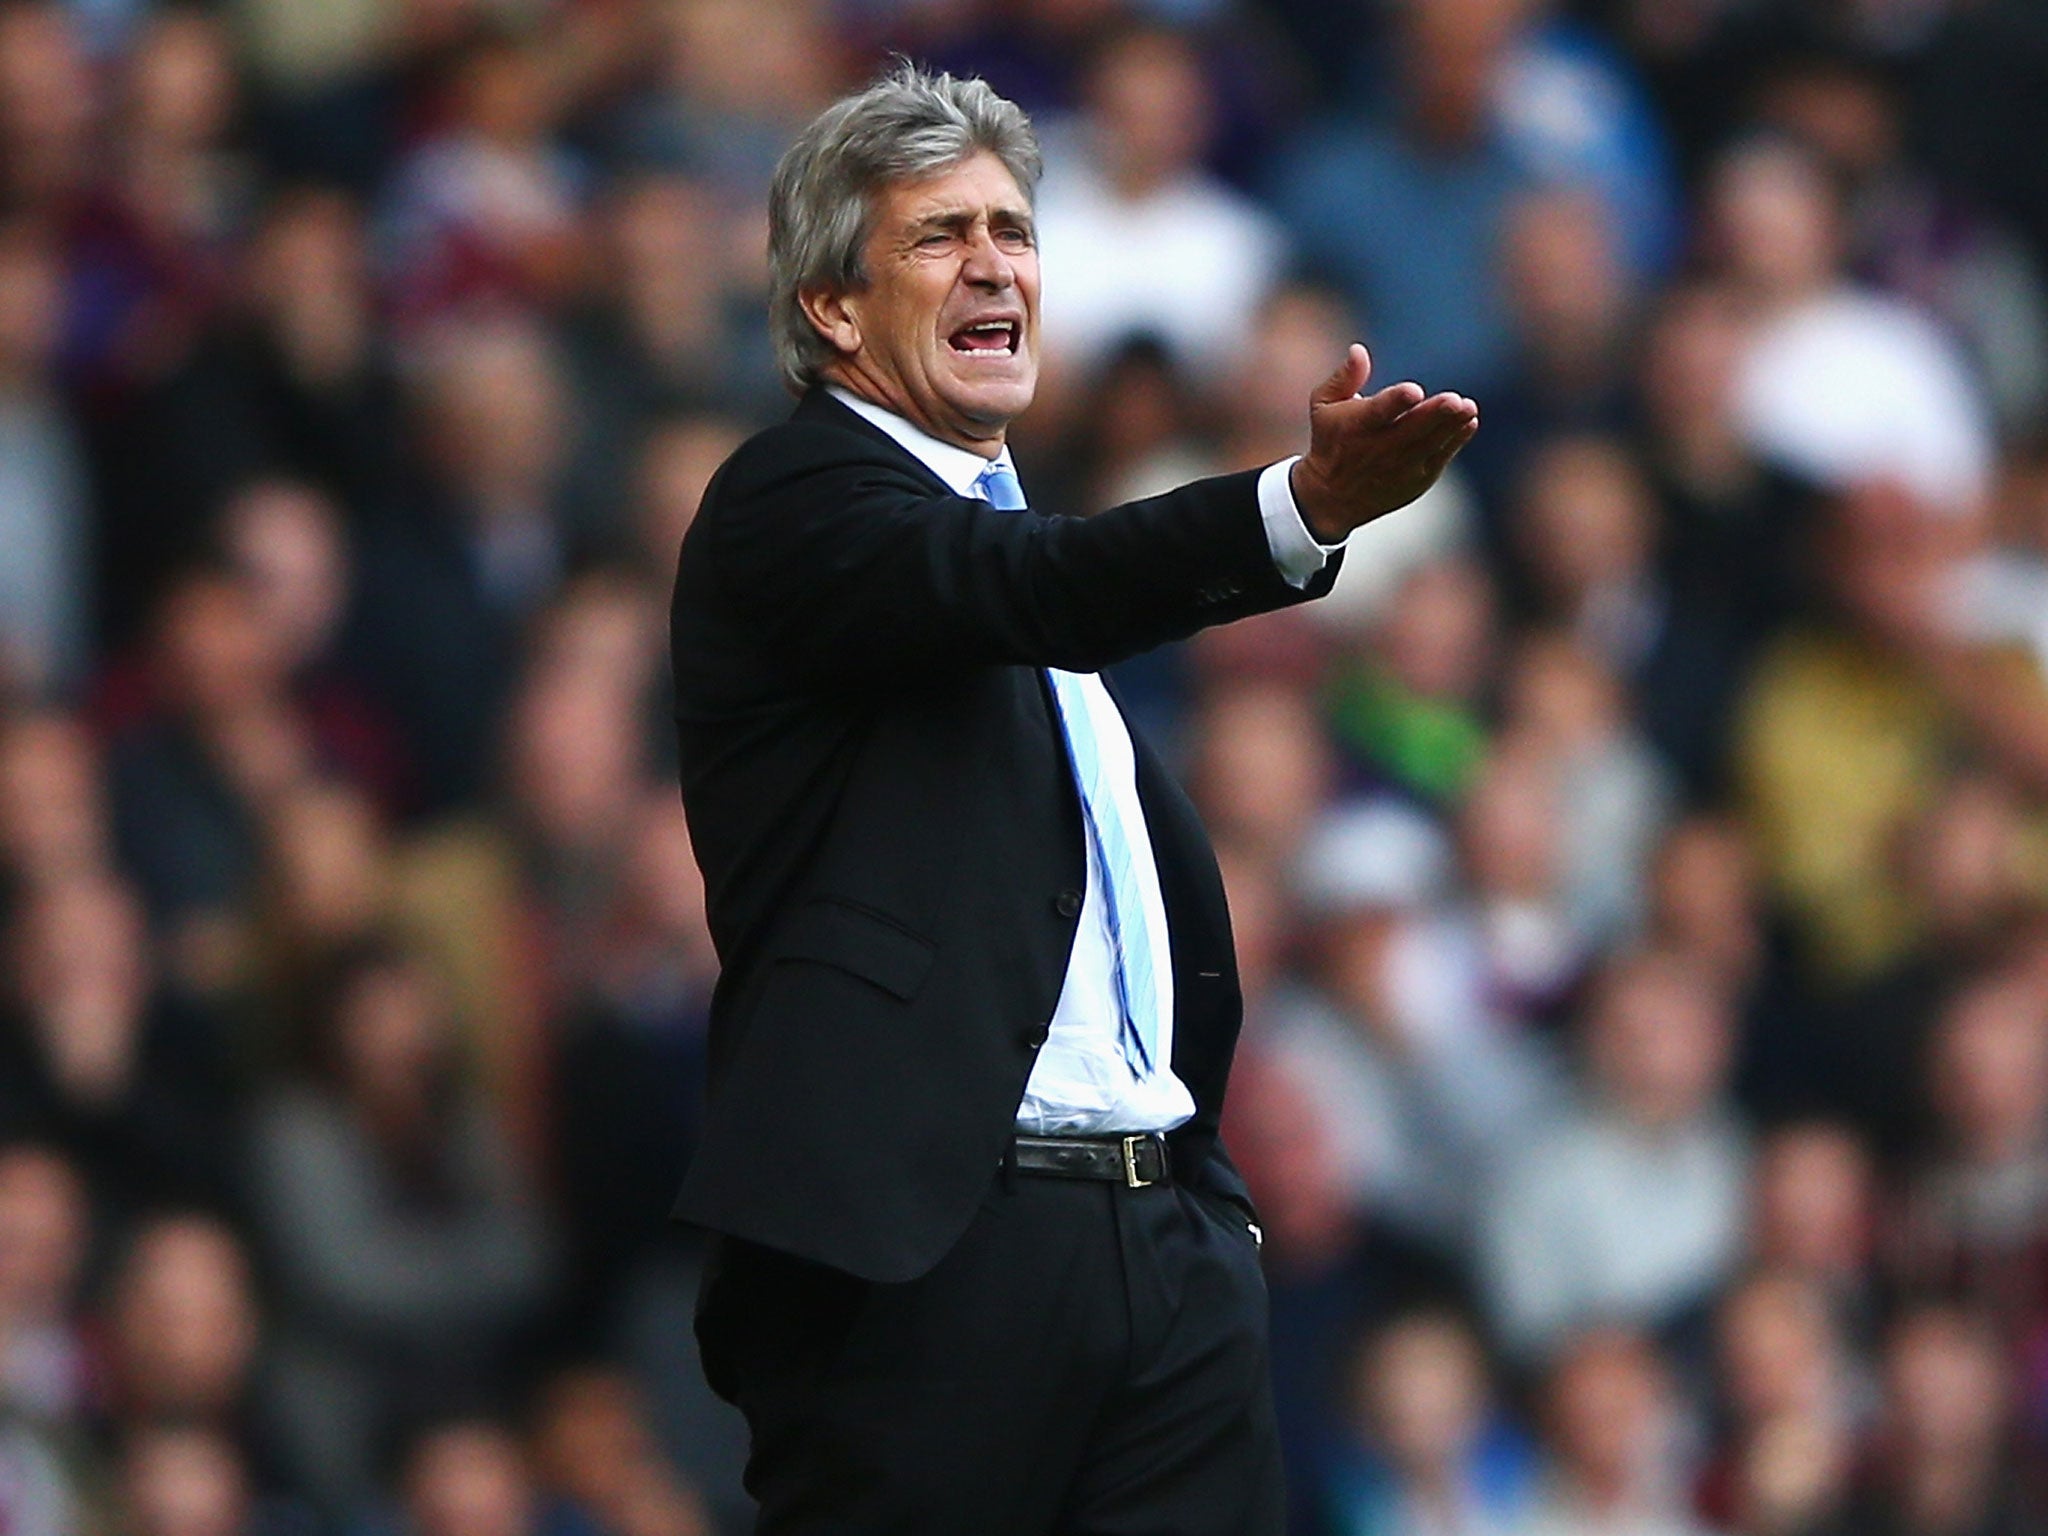 Manuel Pellegrini gestures during Manchester City's 2-1 defeat to West Ham